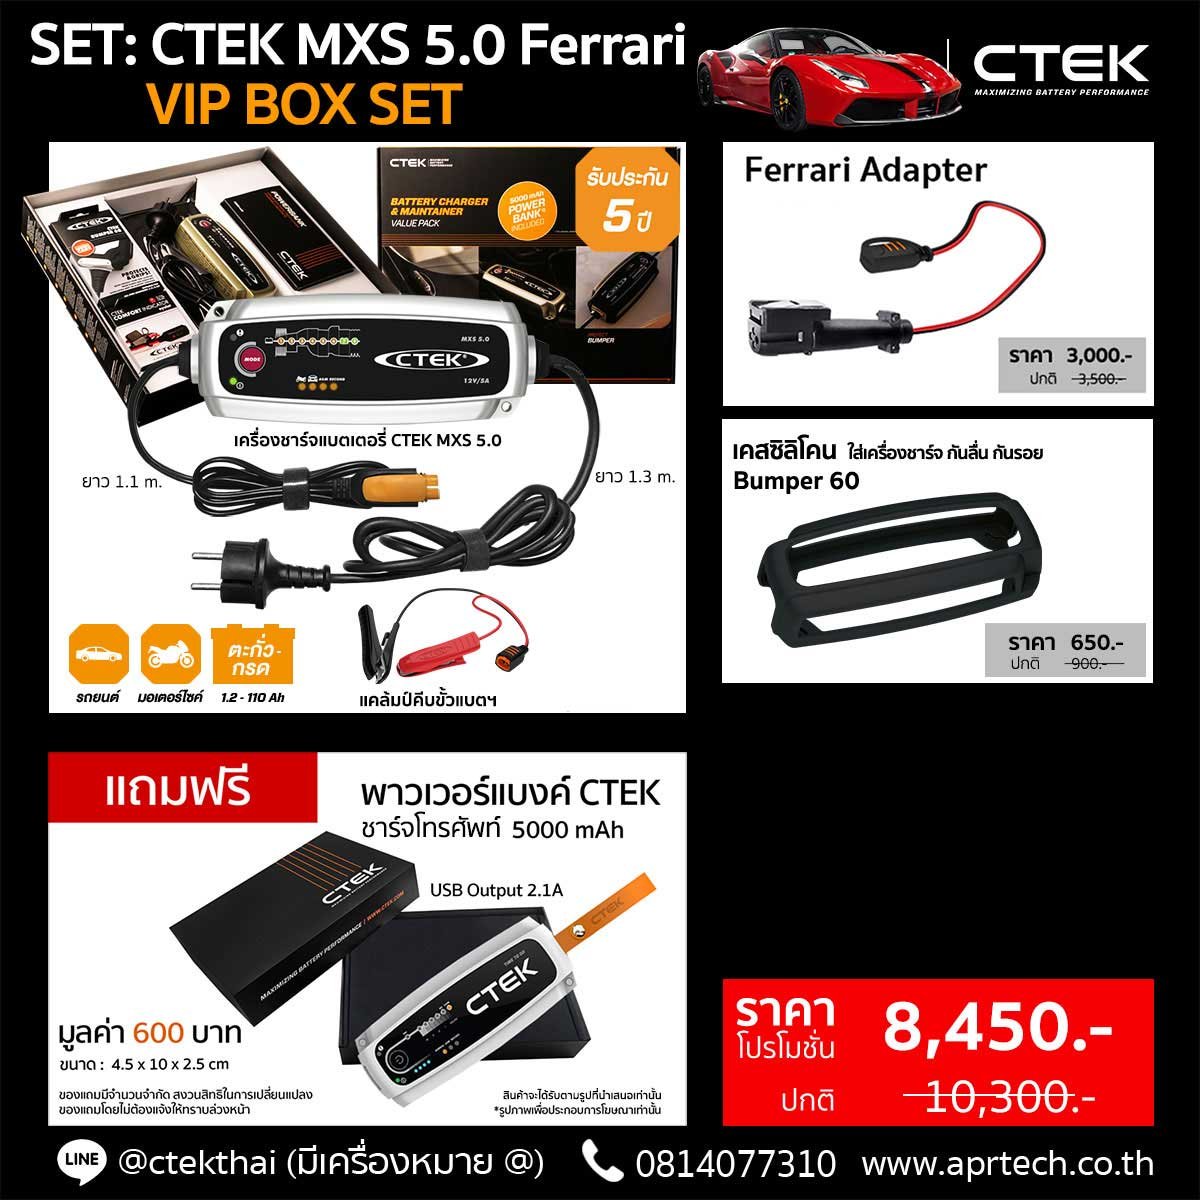 SET CTEK MXS 5.0 Ferrari VIP BOX SET (CTEK MXS 5.0 + Ferrari Adapter + Bumper)